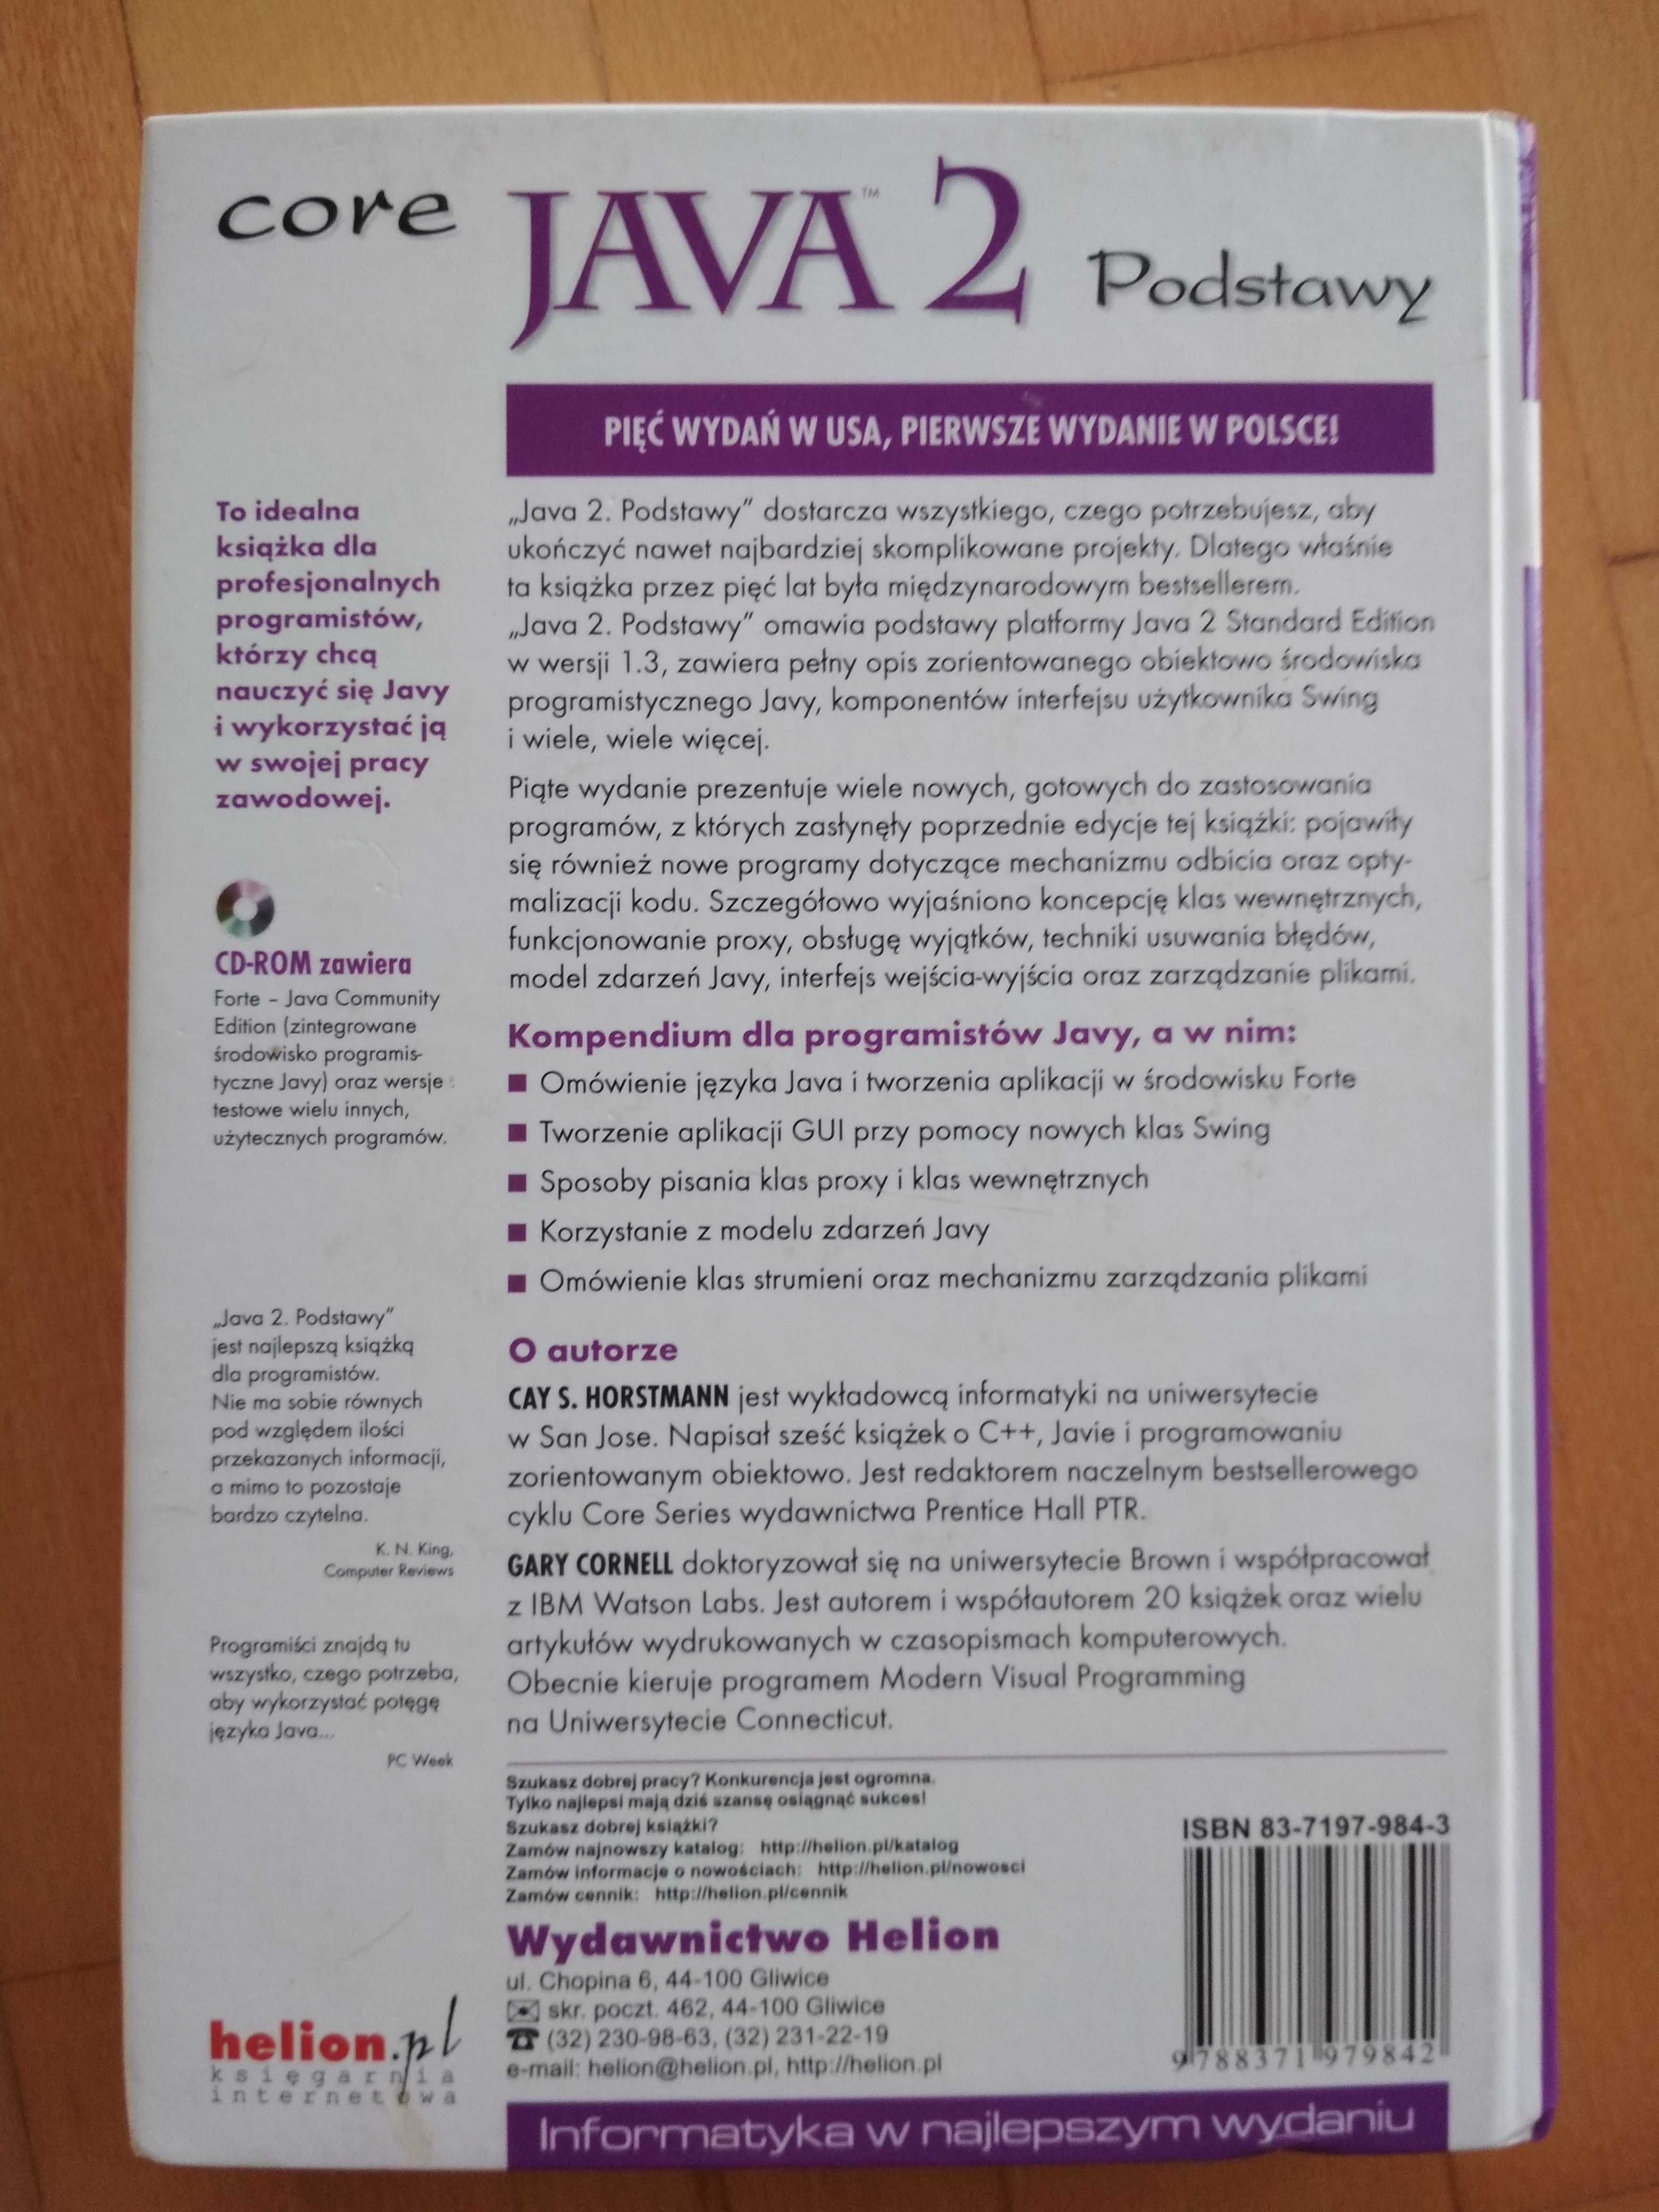 Java 2 Podstawy - Cay S. Horstmann Gary Cornell